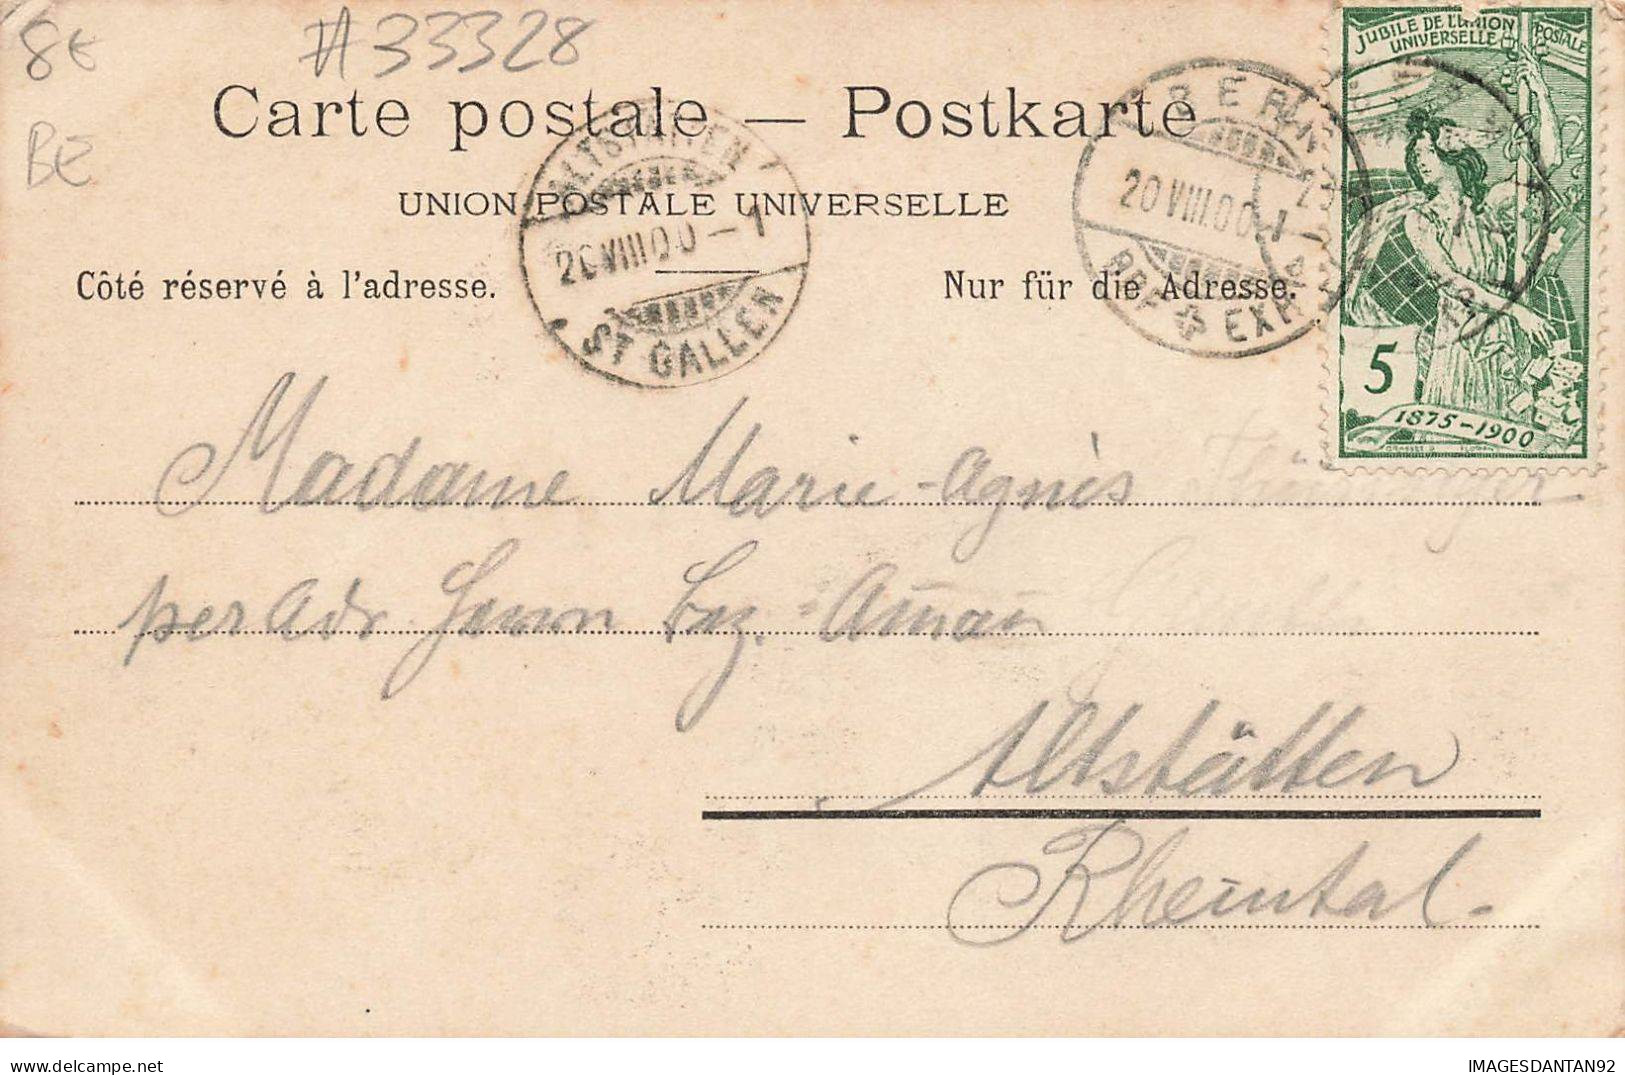 SUISSE #MK33328 GRUSS VON BERNE + TIMBRE JUBILE 1900 - Bern